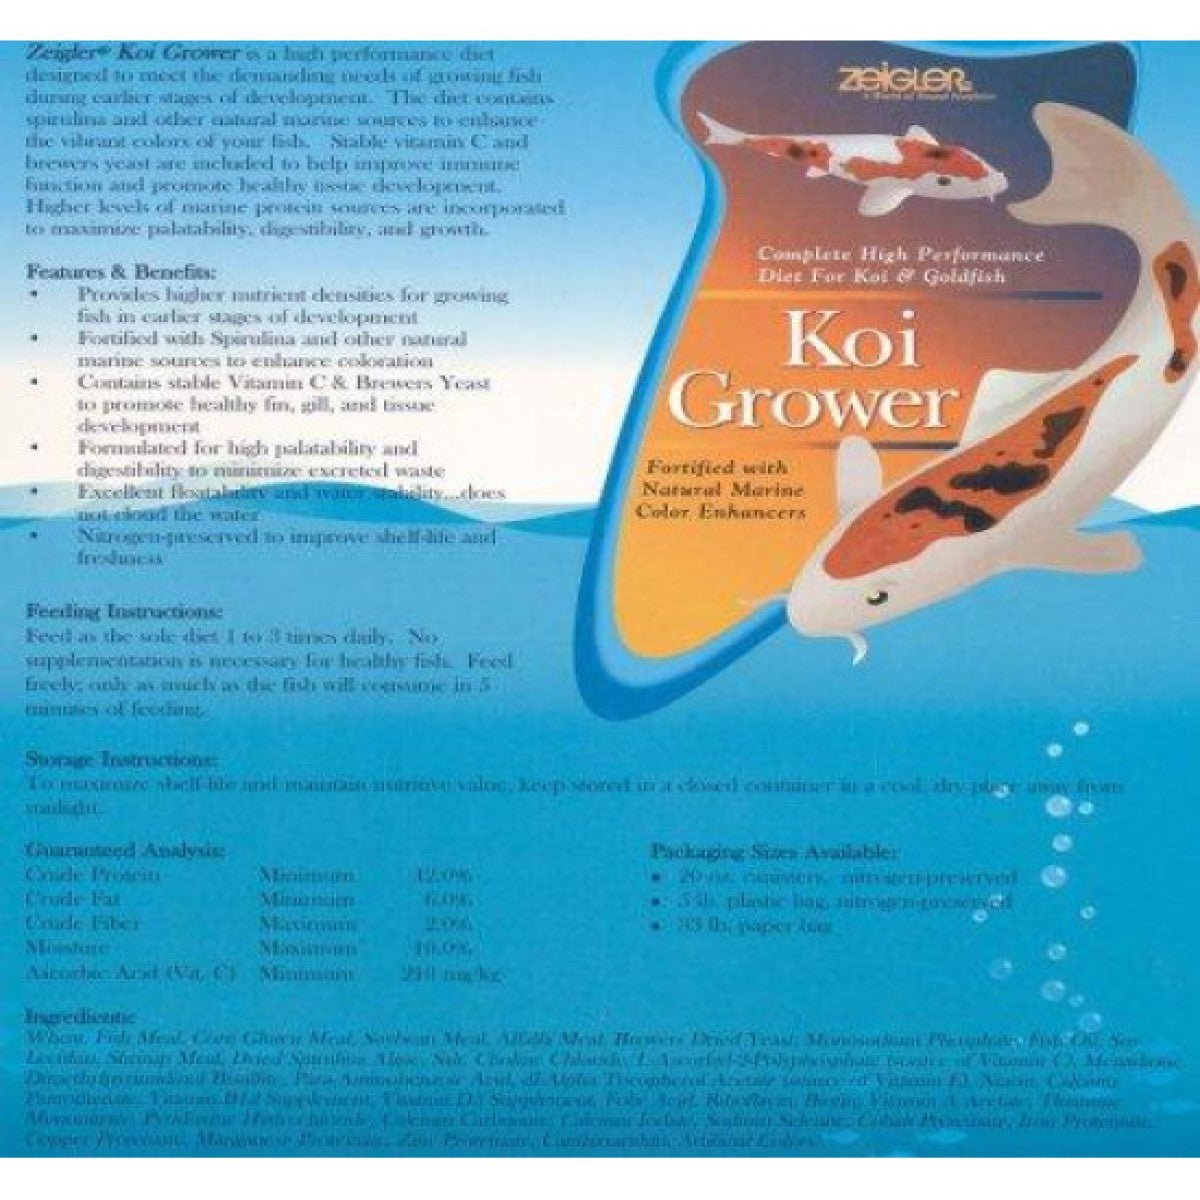 Koi Grower Koi Growth food from Zeigler information